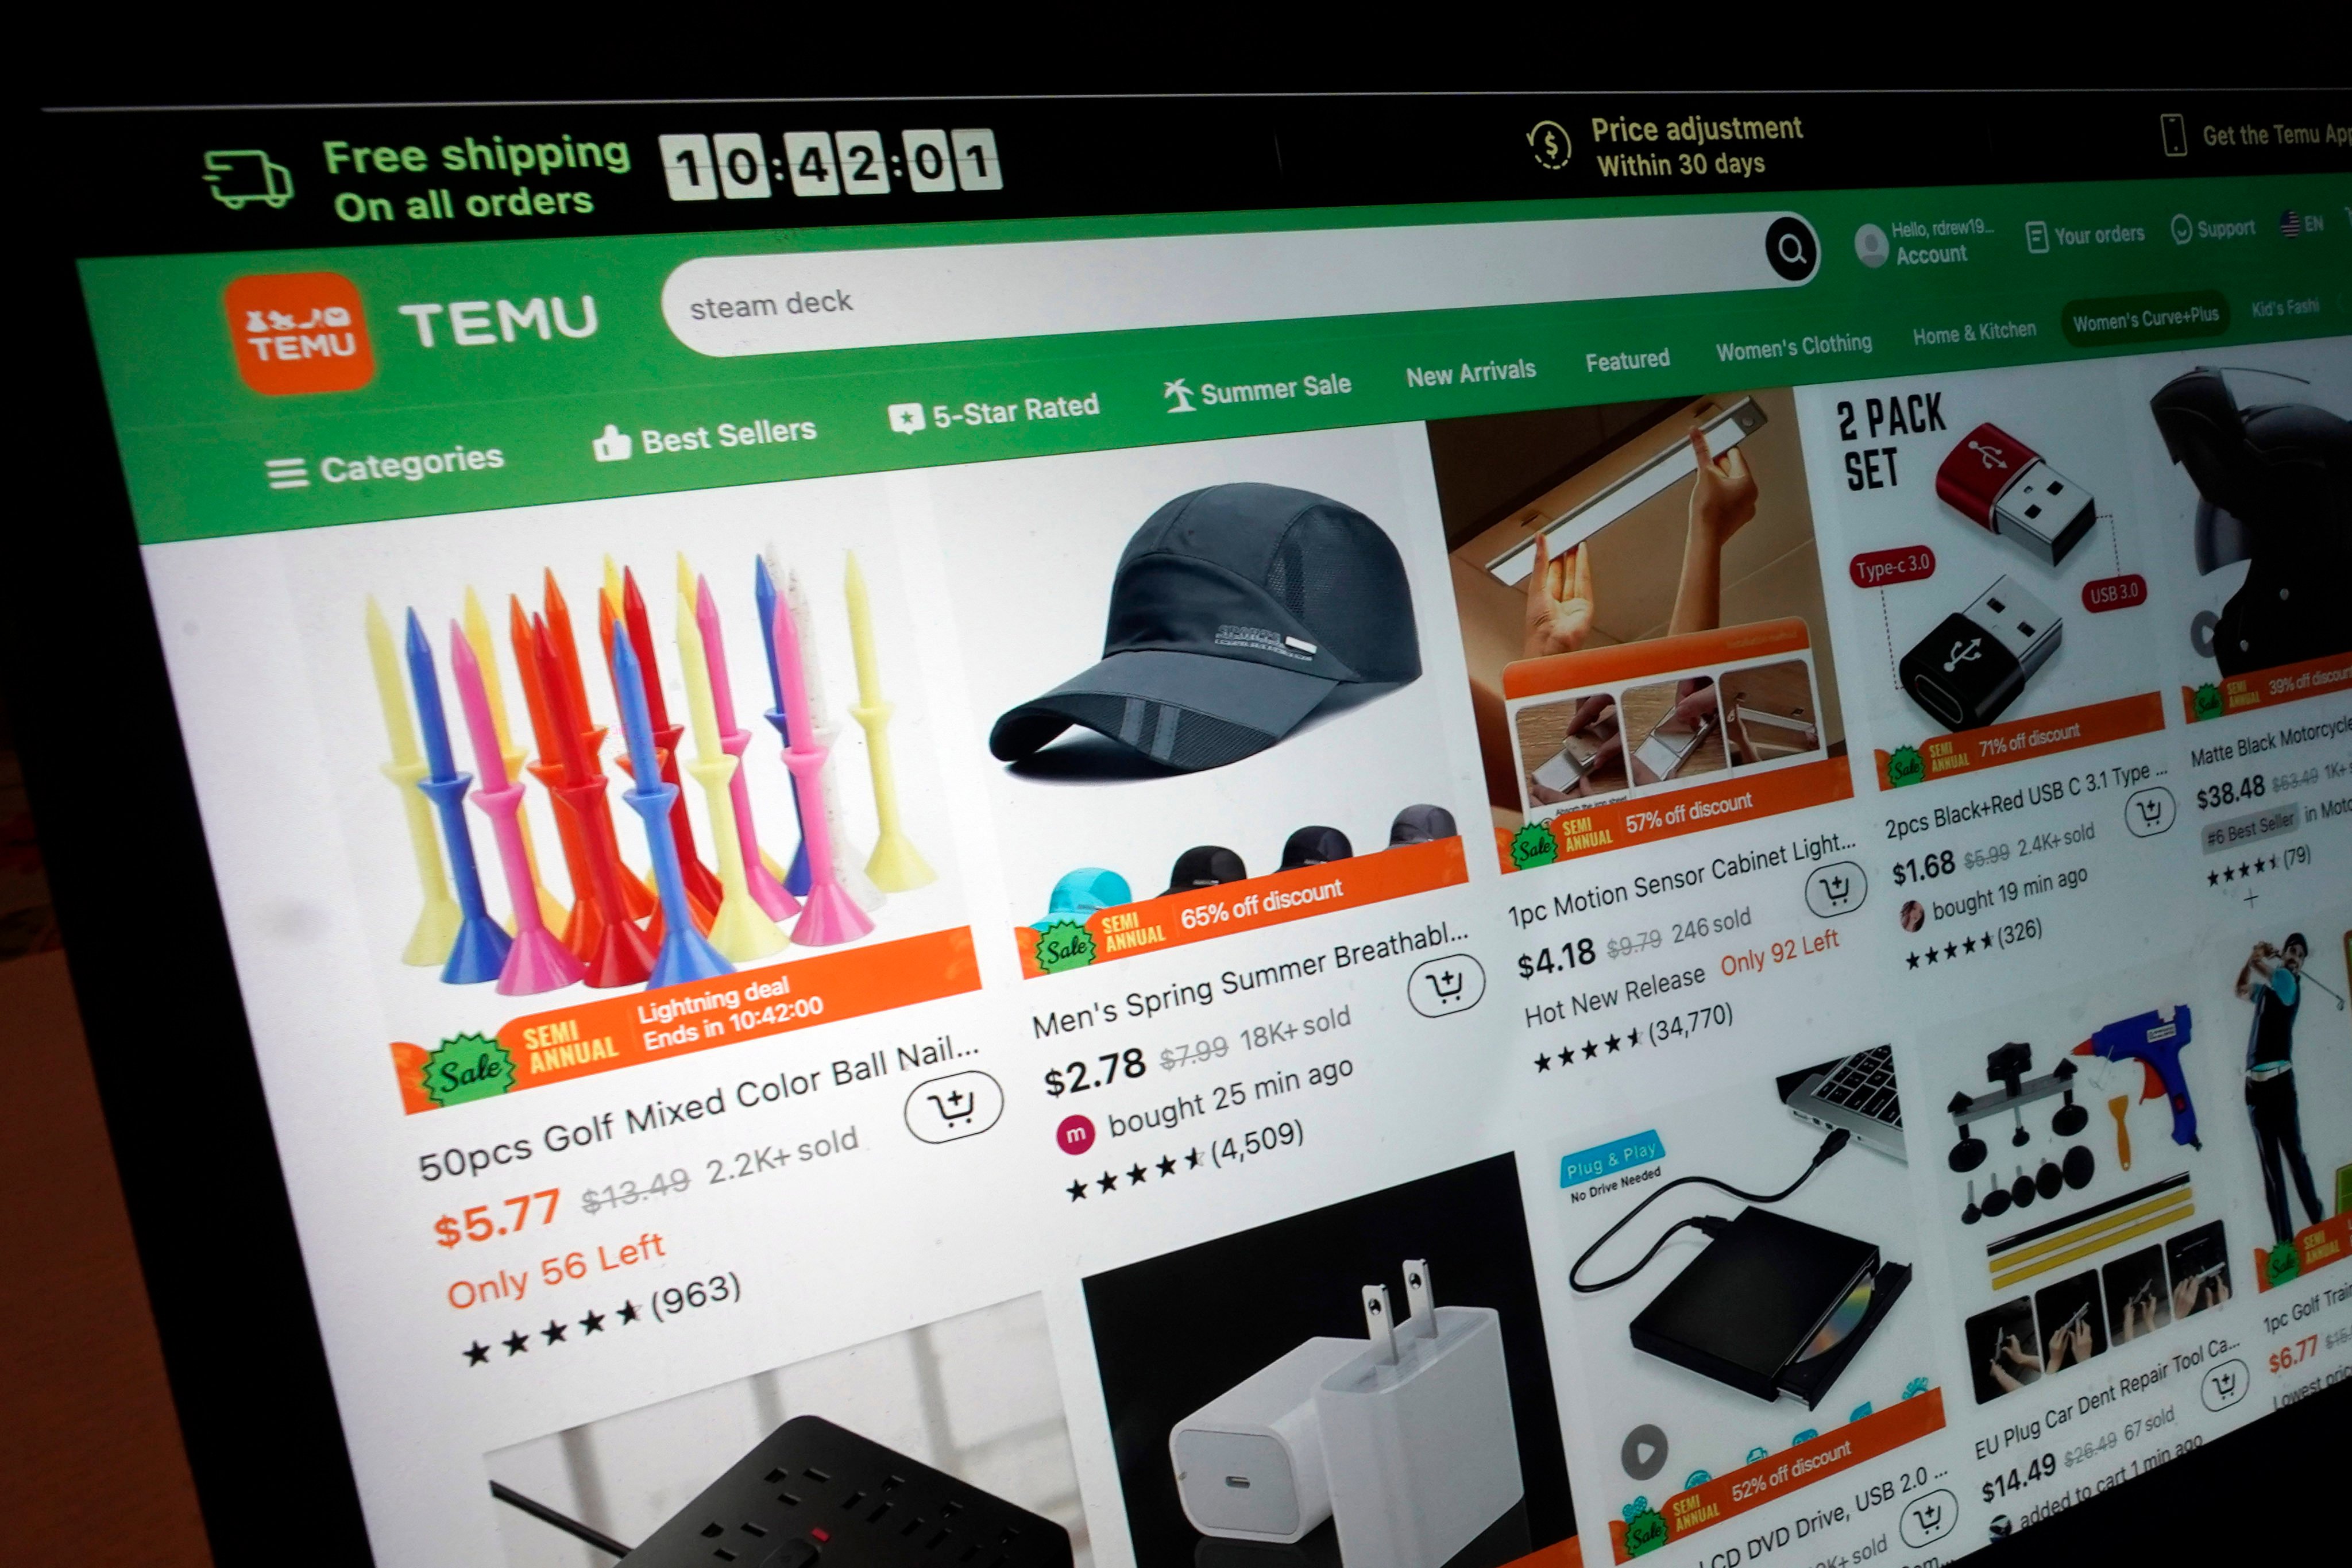 Temu Social Shopping App, Already A Winner, Kicks Off U.S. Campaign With  Super Bowl Ads